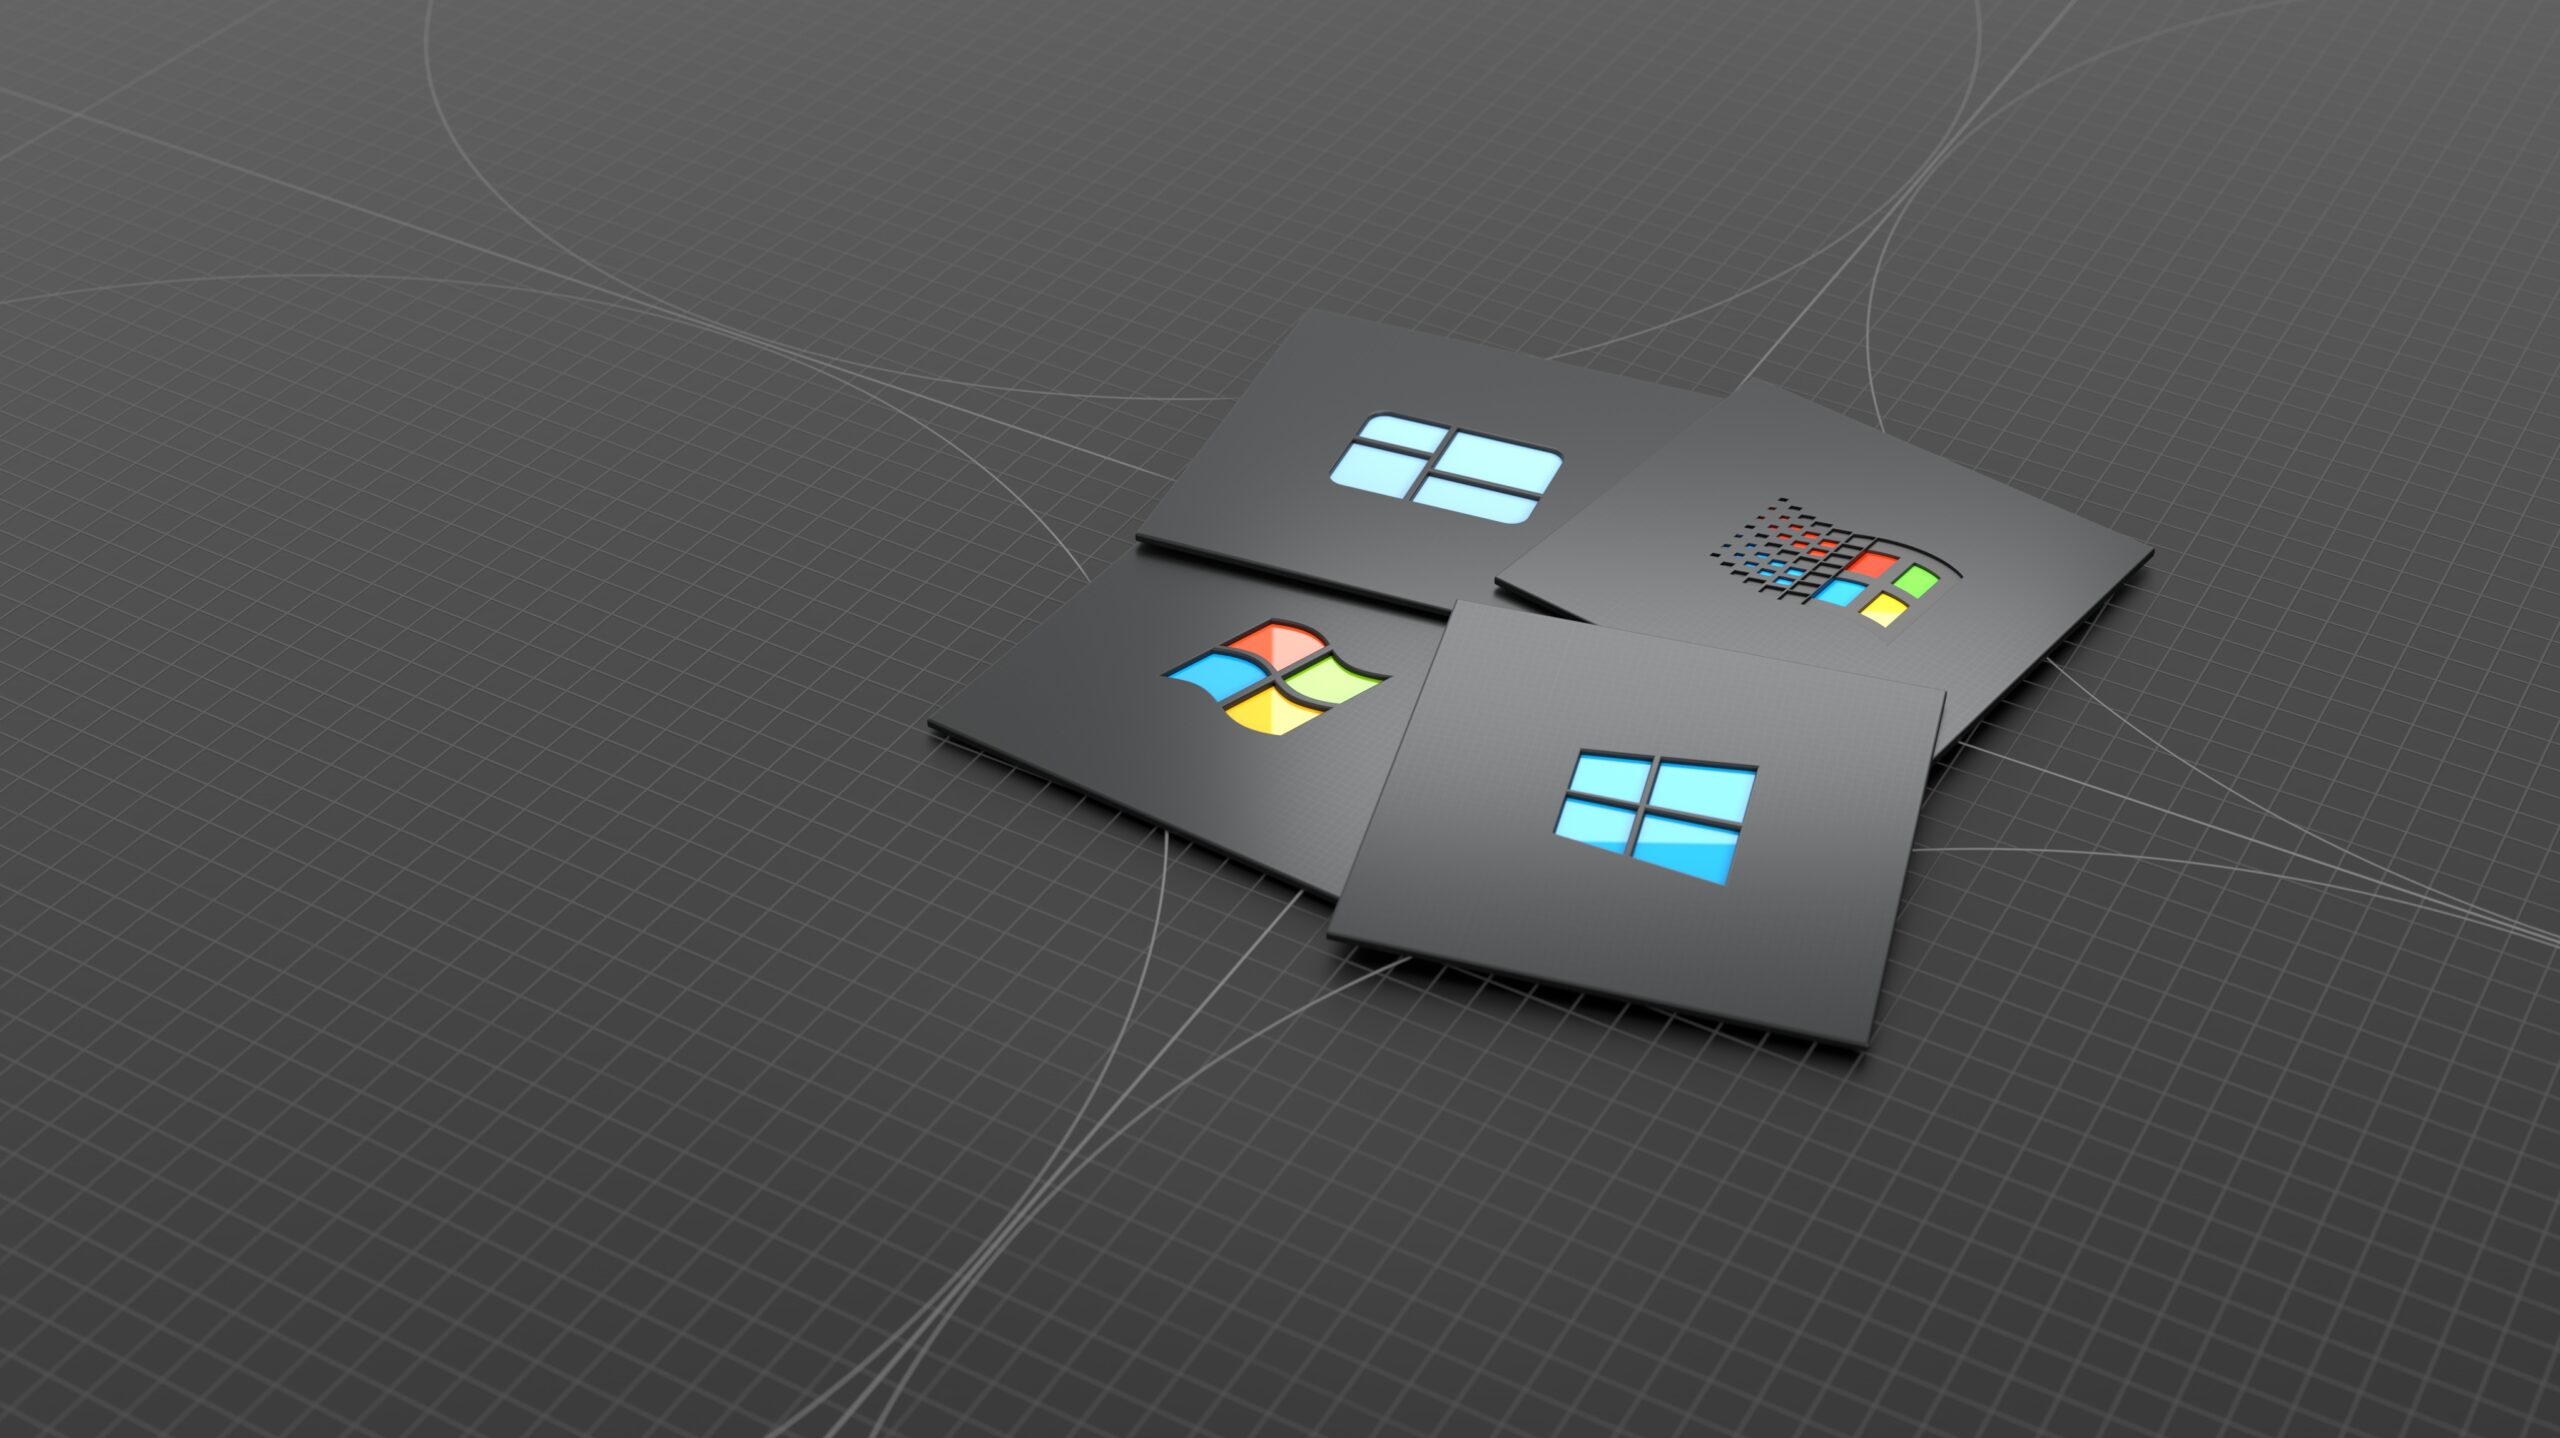 Windows 10 Desktop Wallpaper Pack